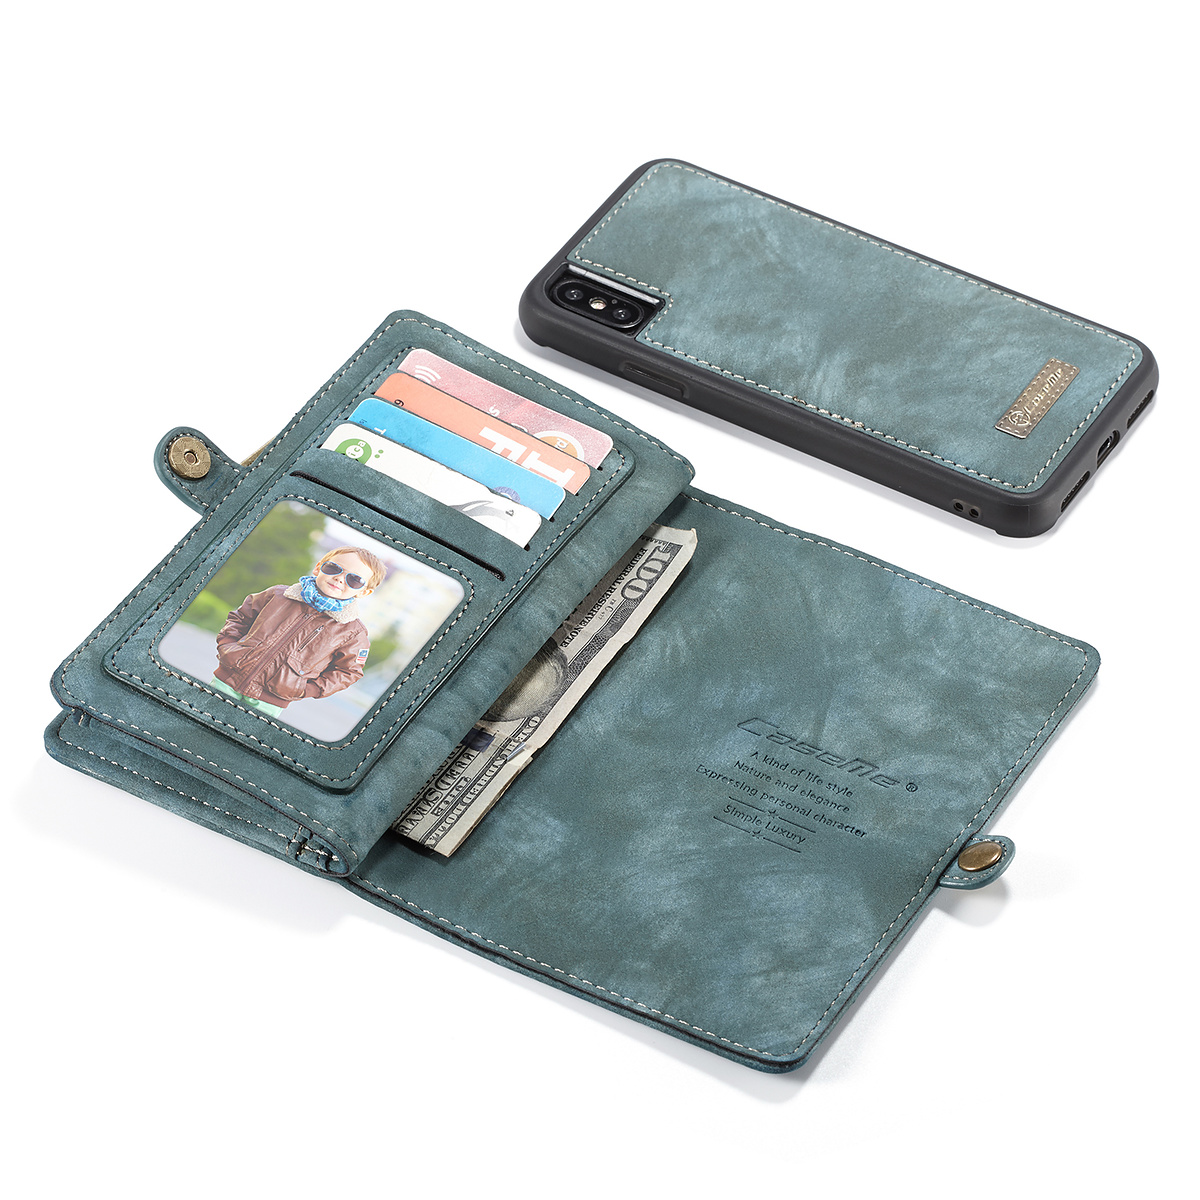 CaseMe plånboksfodral med magnetskal till iPhone X/XS, blå